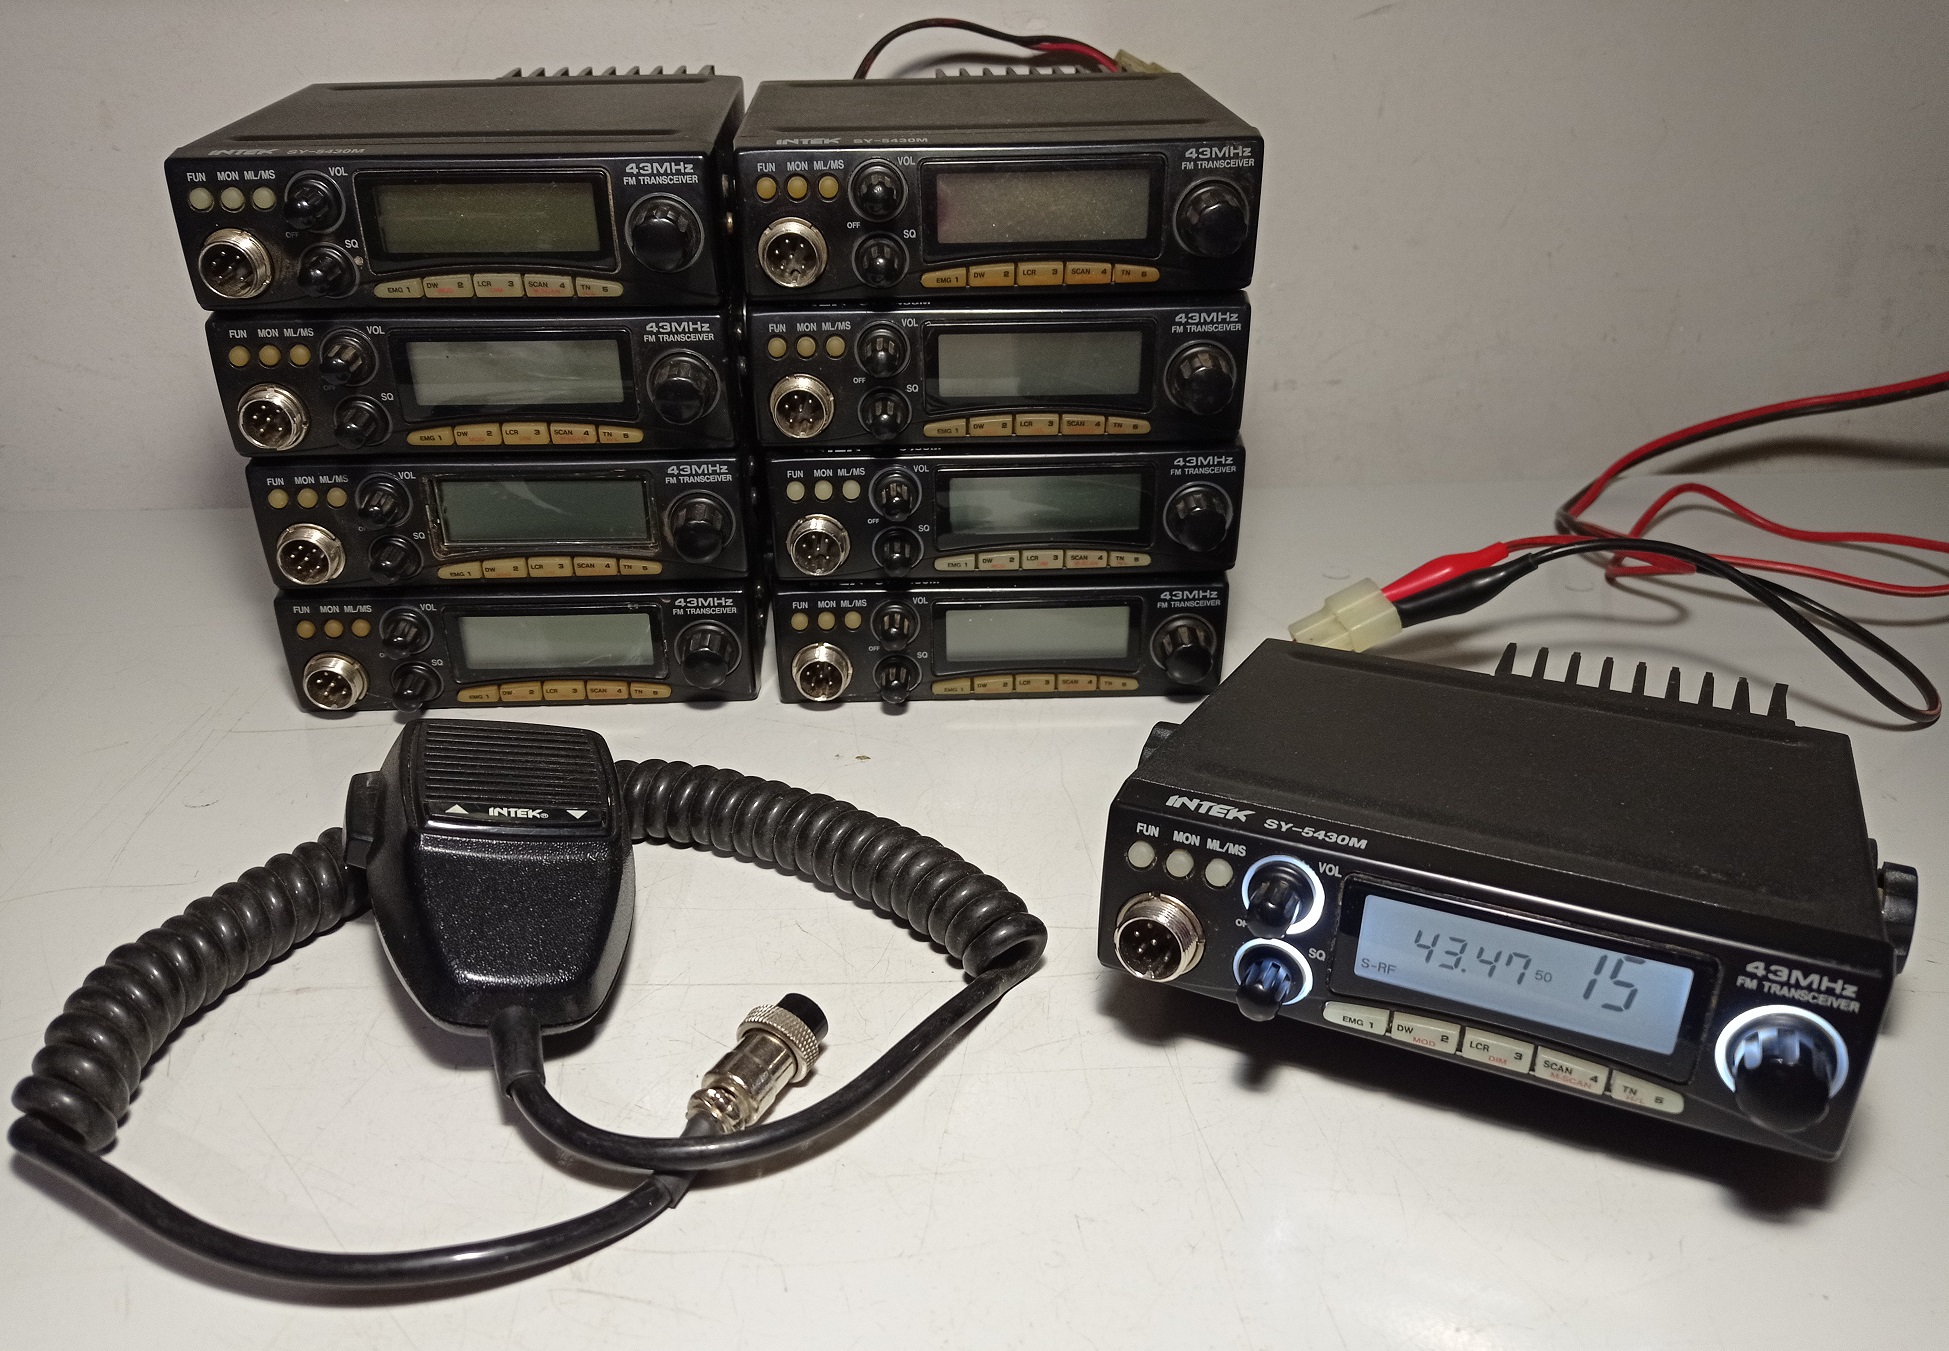 INTEK SY-5430M Radio Veicolare 43 Mhz FM Transceiver